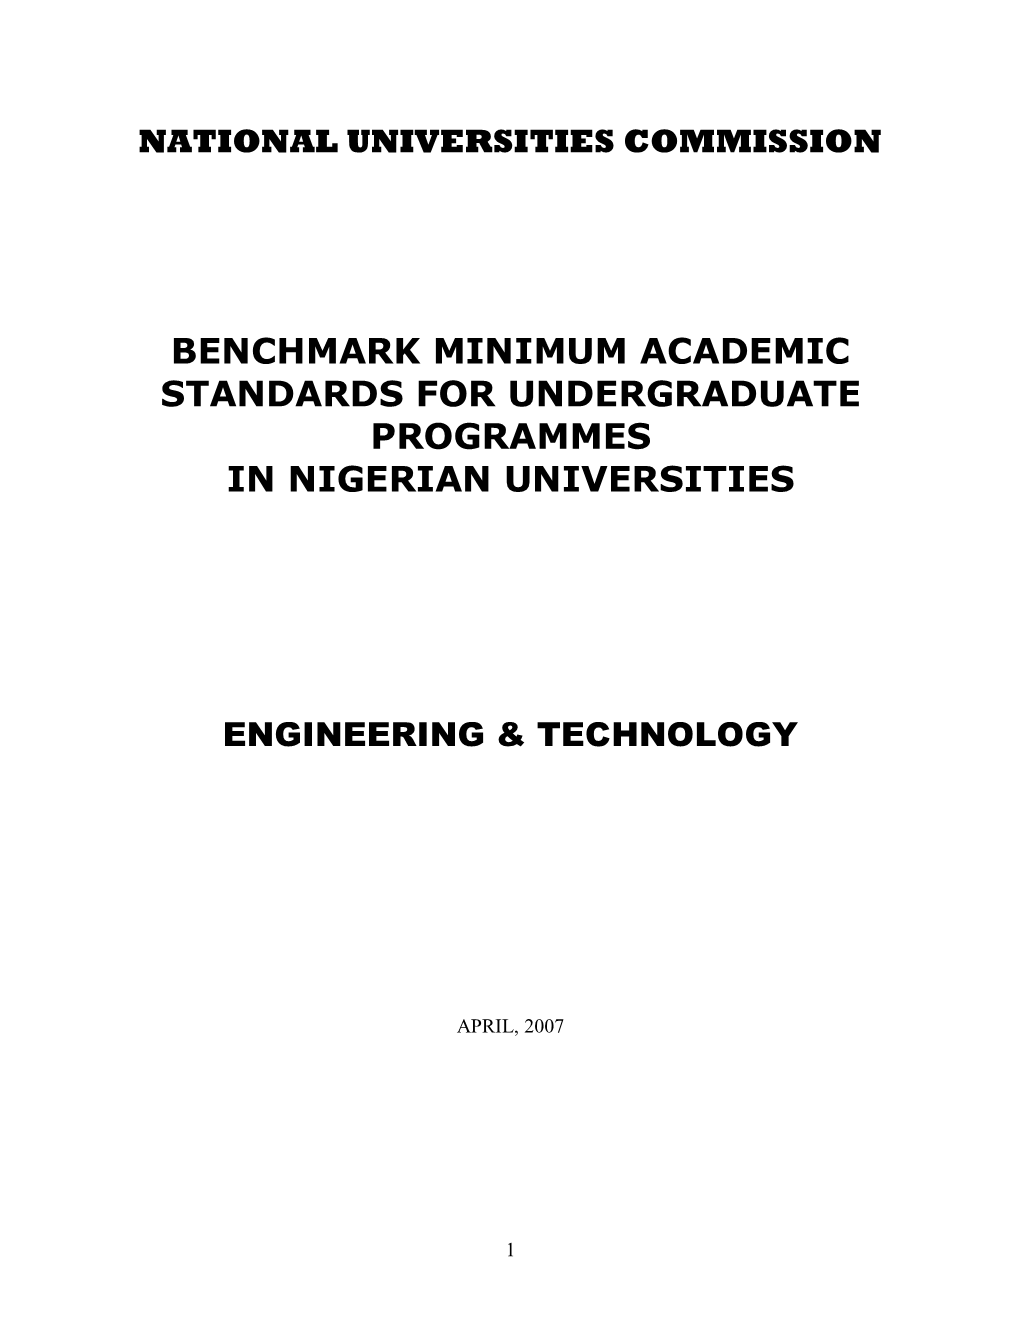 Benchmark Minimum Academic Standards for Undergraduate Programmes in Nigerian Universities